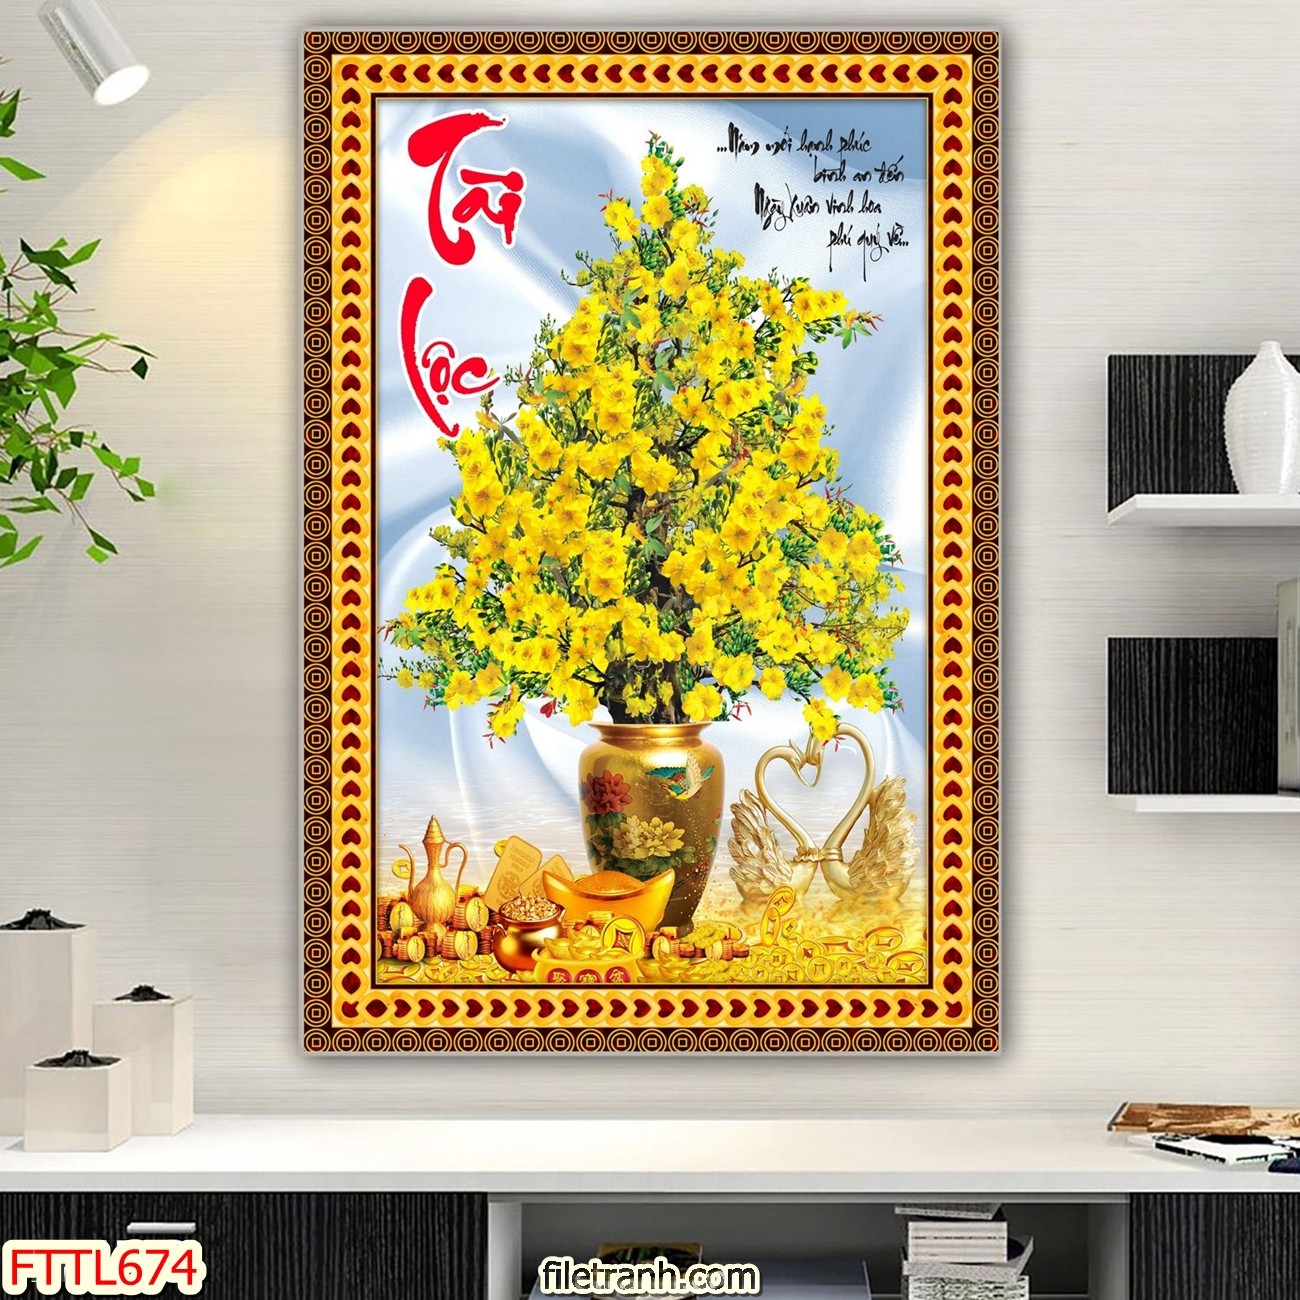 https://filetranh.com/file-tranh-chau-mai-bonsai/file-tranh-chau-mai-bonsai-fttl674.html